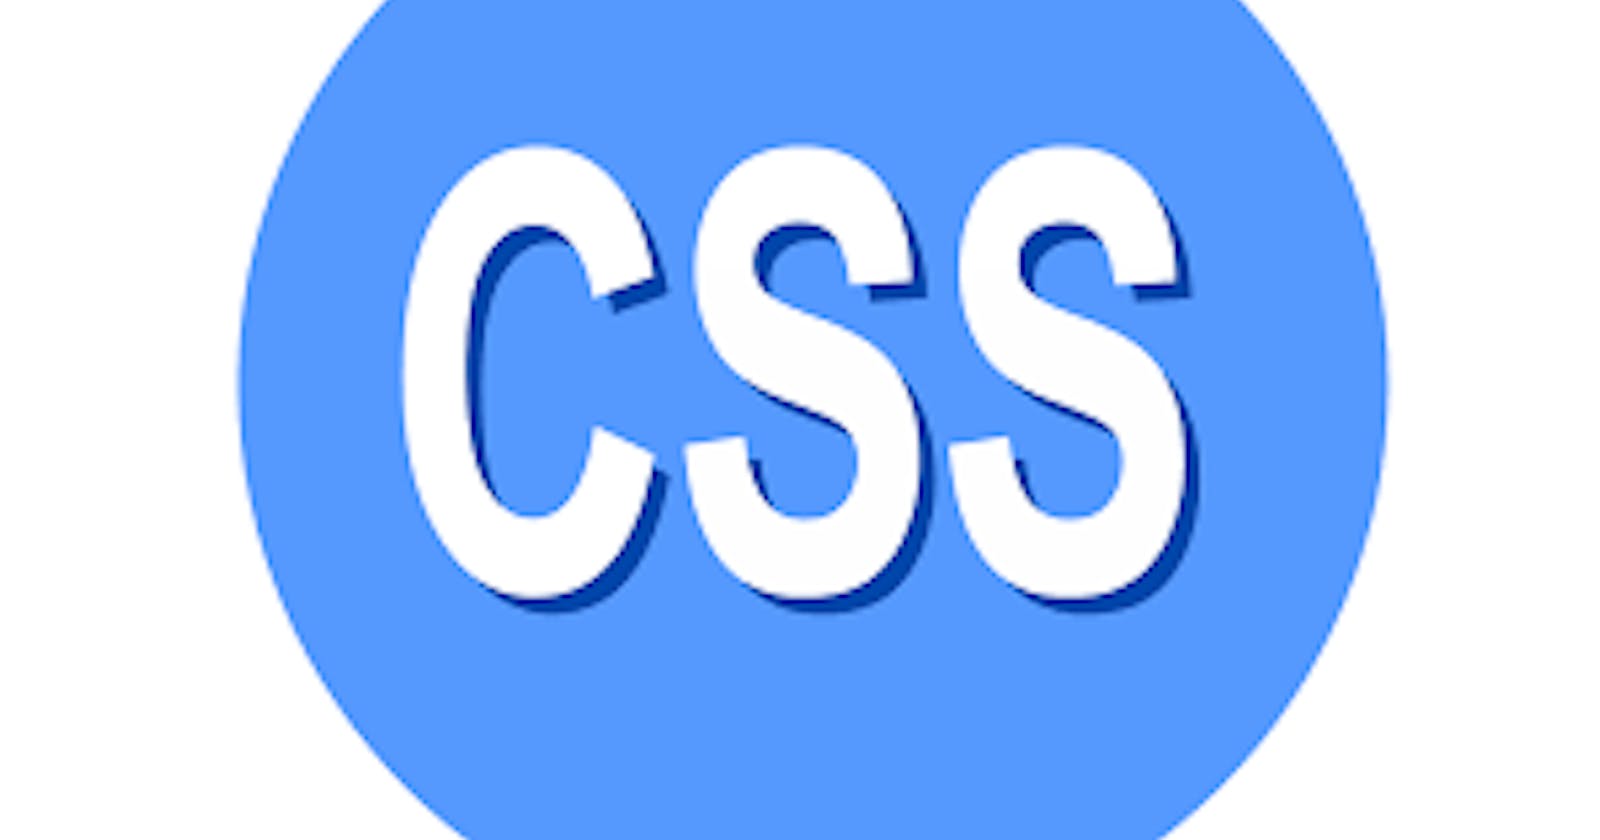 BASICS OF CSS - Part 4 of Frontend Development Series